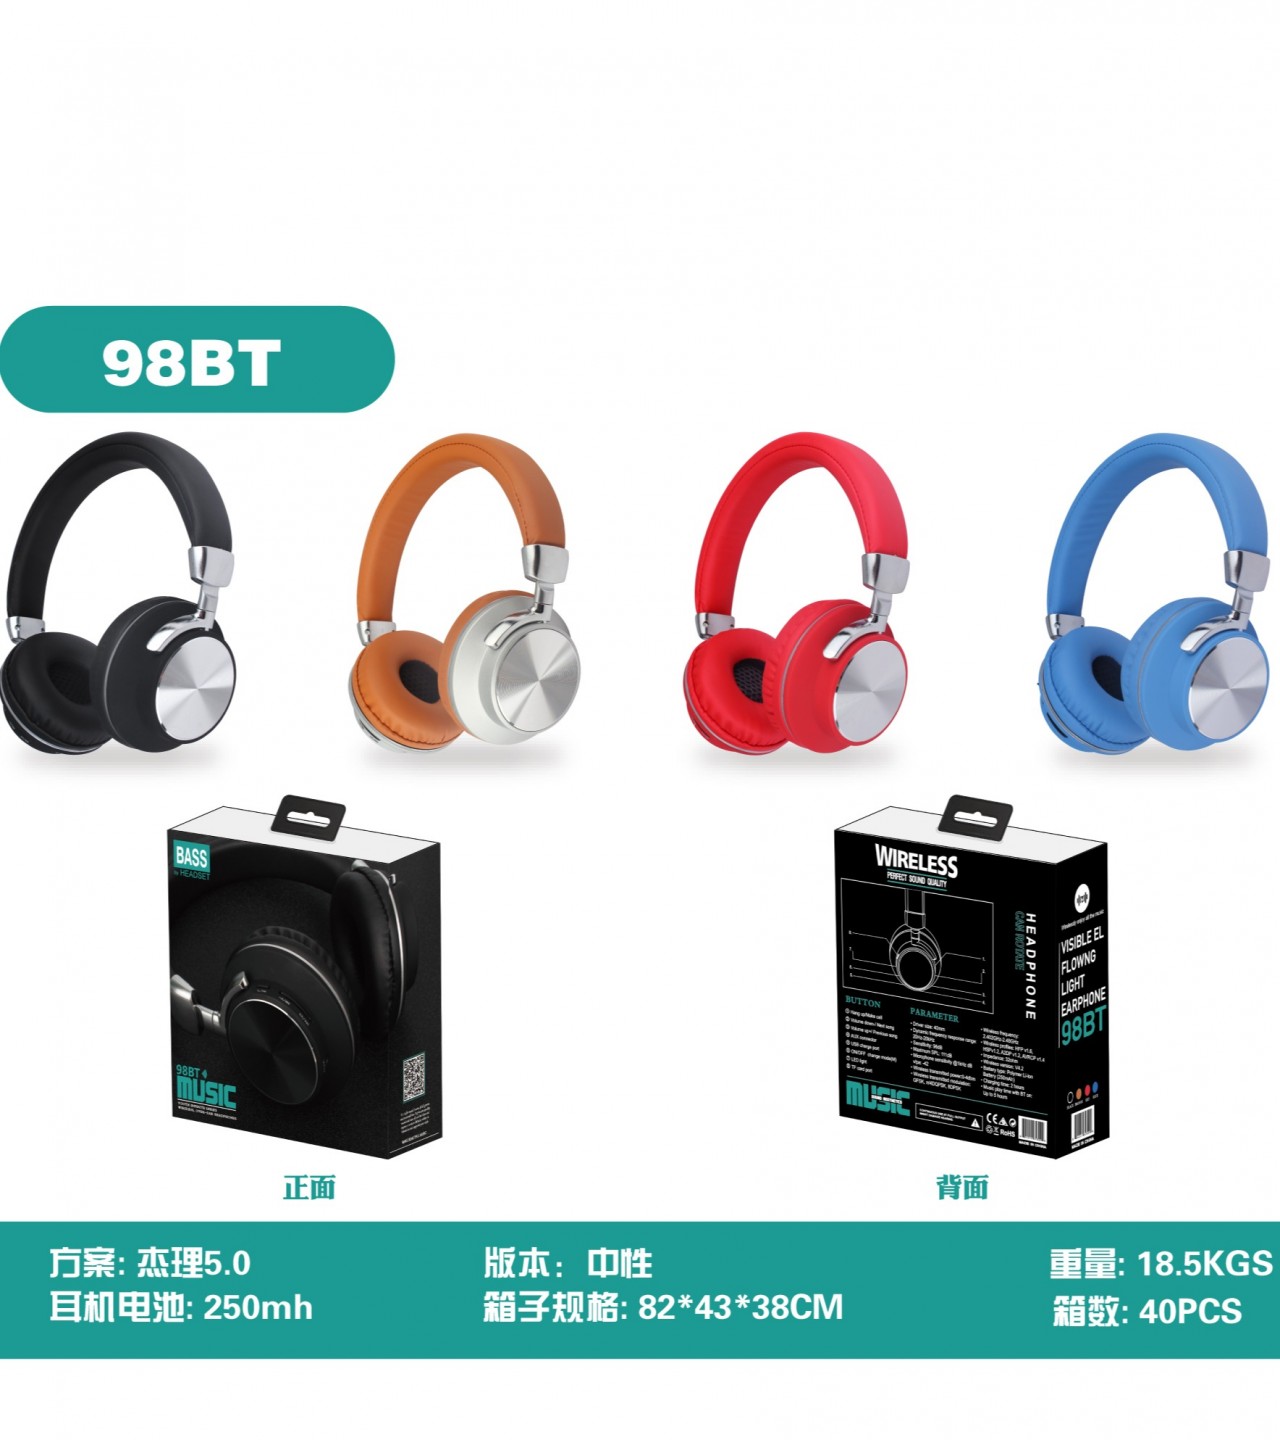 Wireless Headphones 98BT Original Bluetooth Headset Over Ear Headphones - Multi